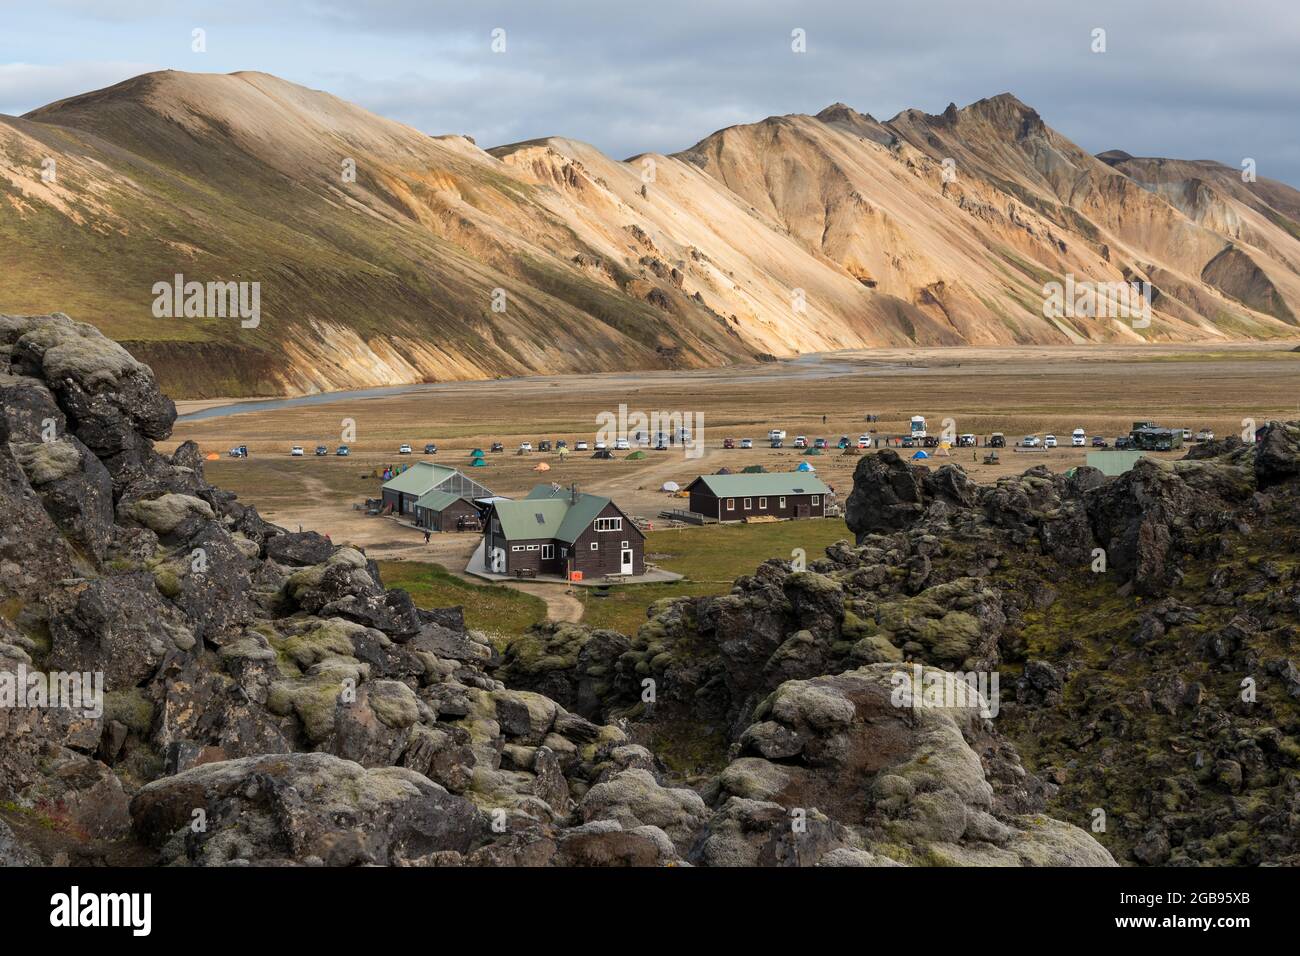 Association de randonnée islandaise cabines, camping, parking, Landmannalaugar, Islandais Highlands, Islande Banque D'Images